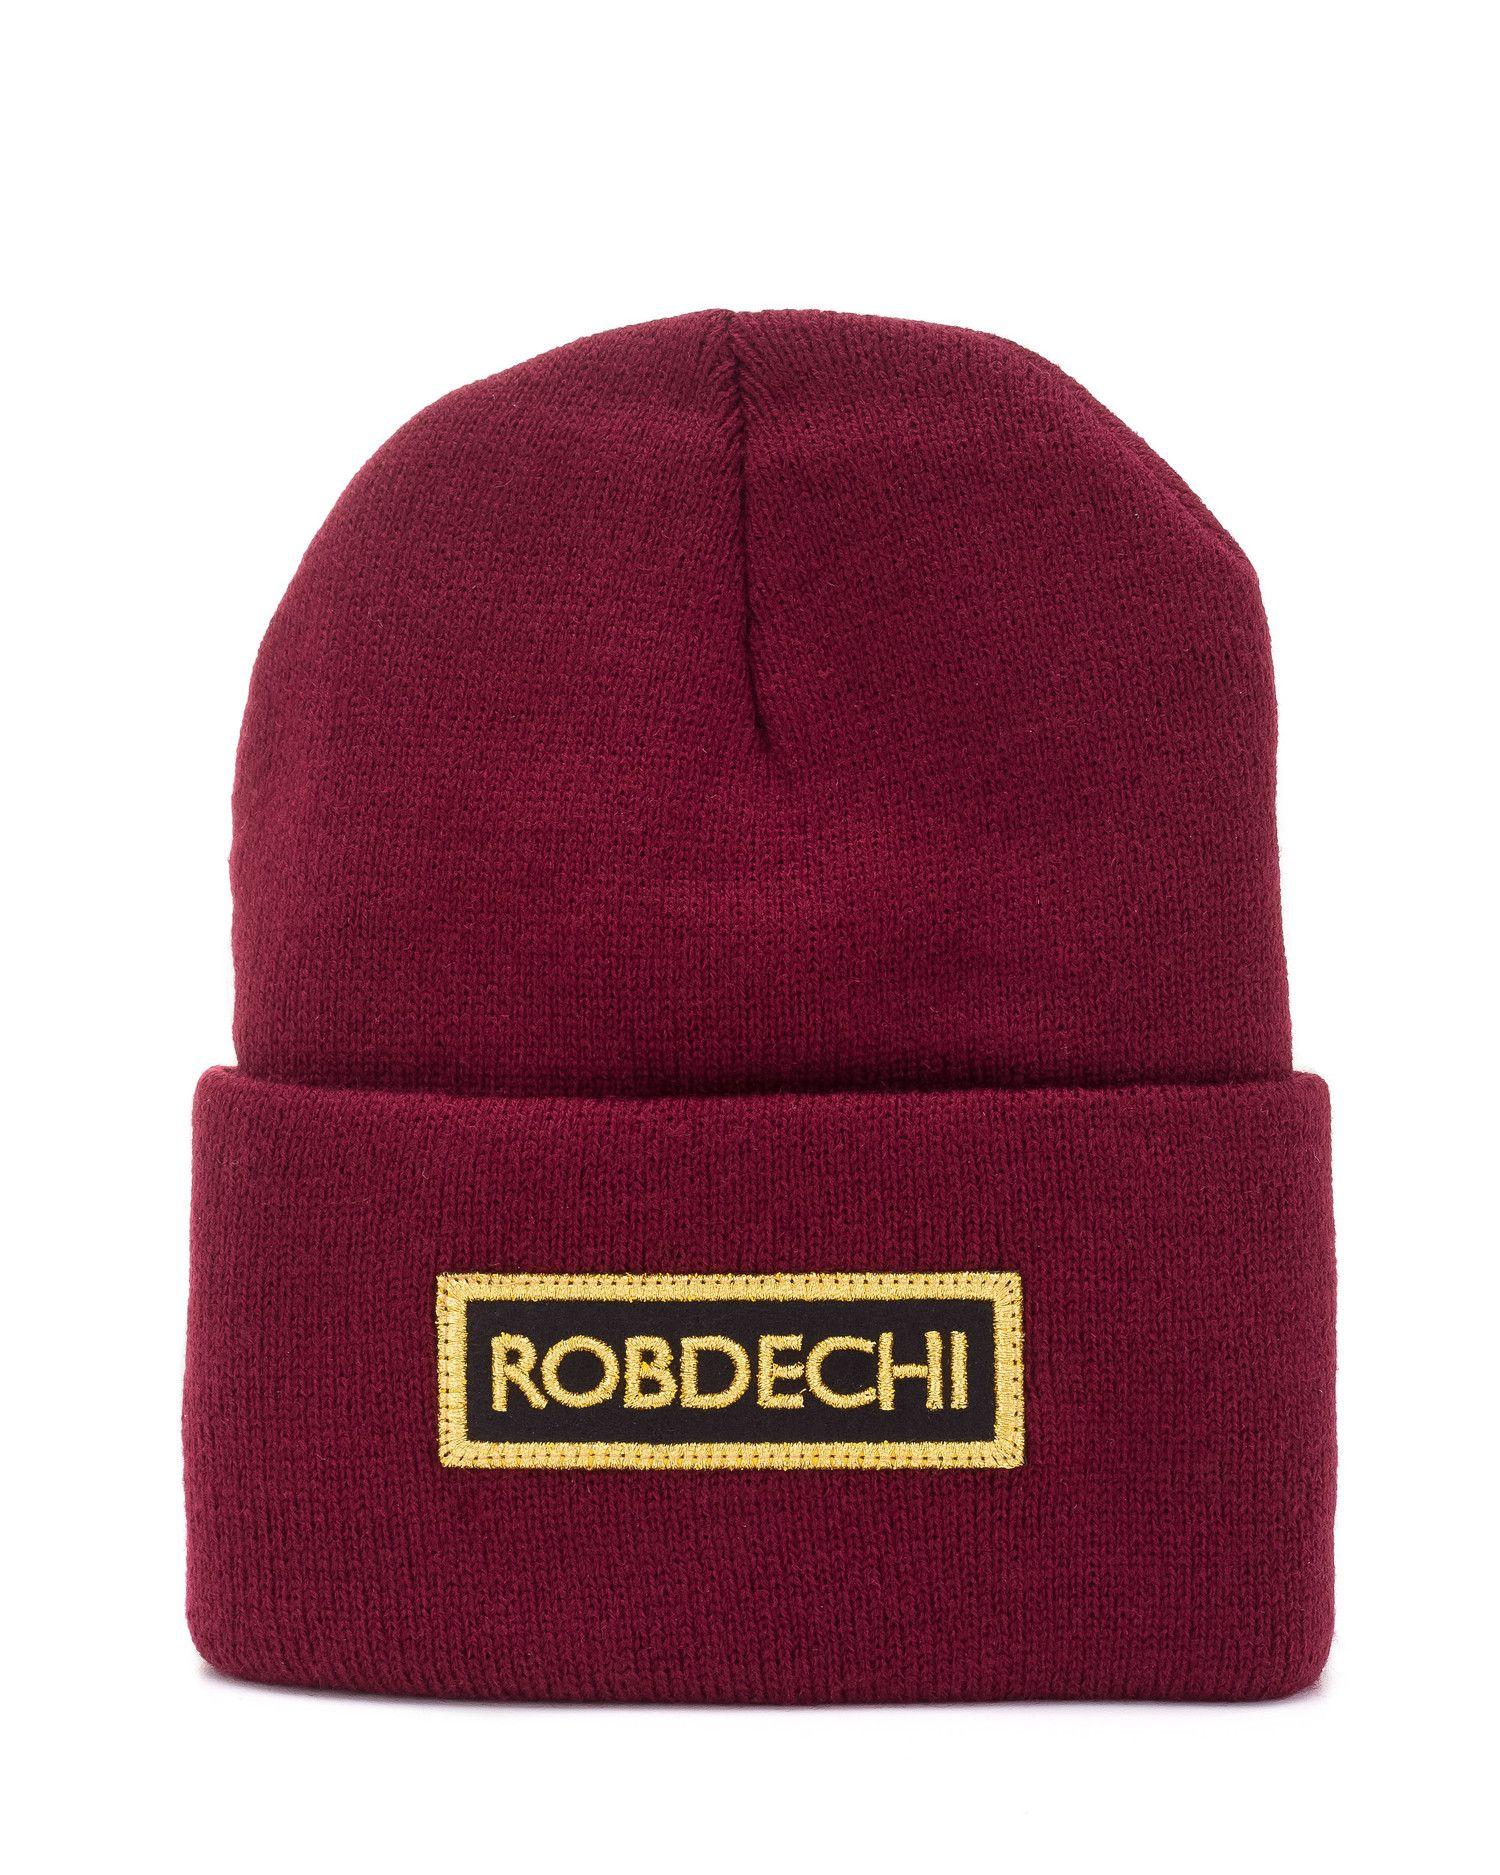 Maroon and Gold Logo - hooded scarf travel - robdechi